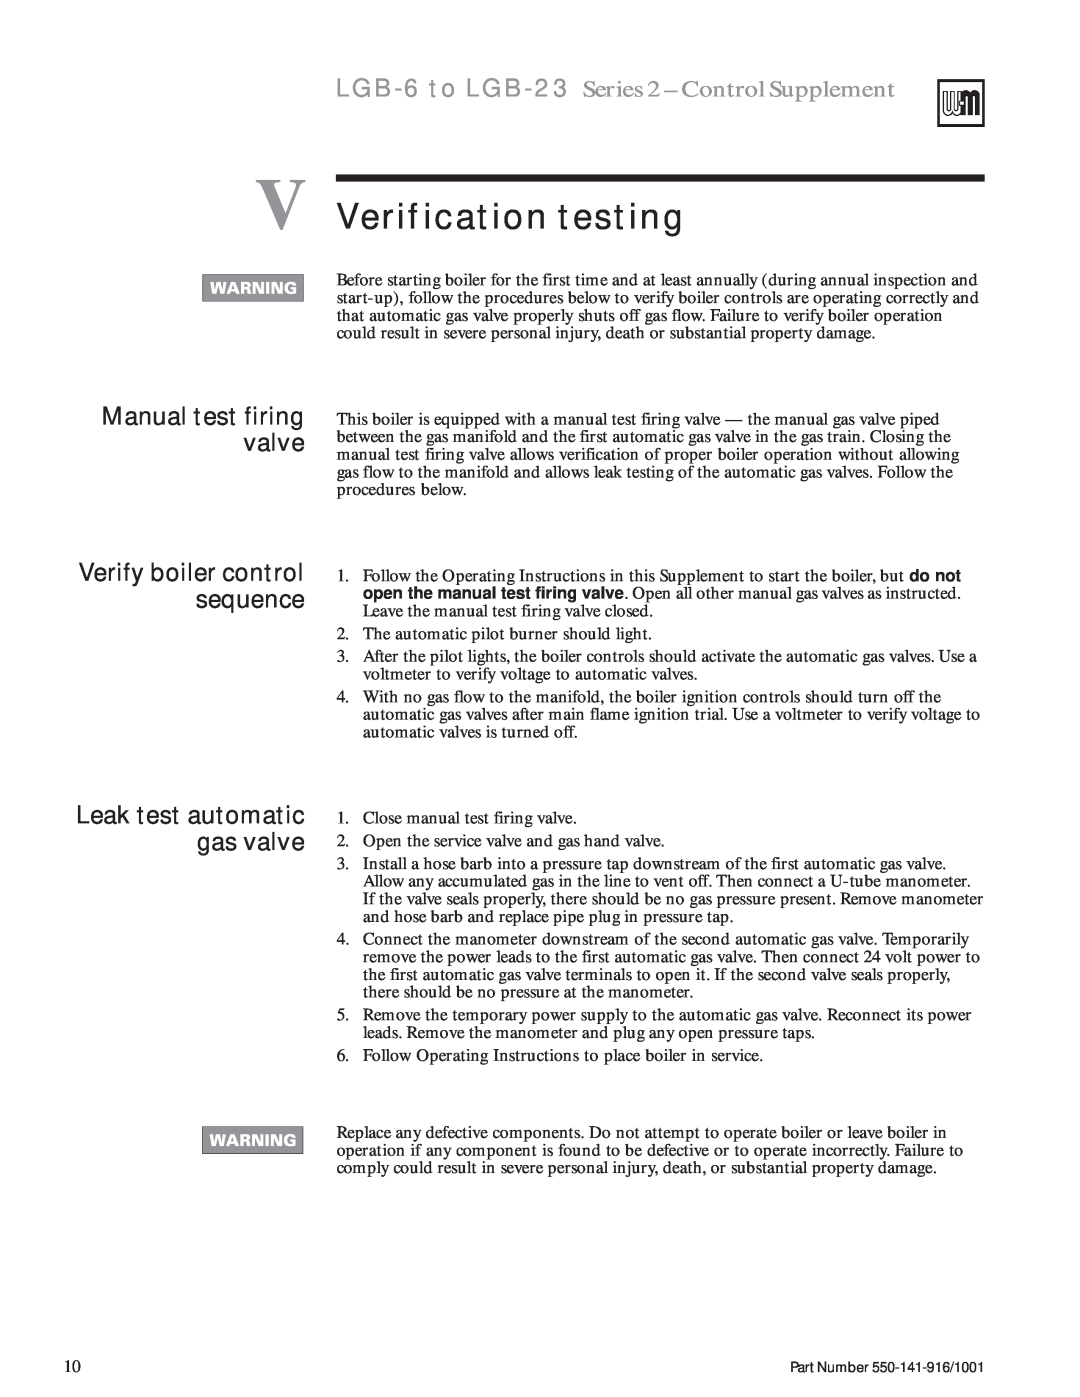 Weil-McLain manual V Verification testing, Manual test firing valve, LGB-6to LGB-23 Series 2 - Control Supplement 